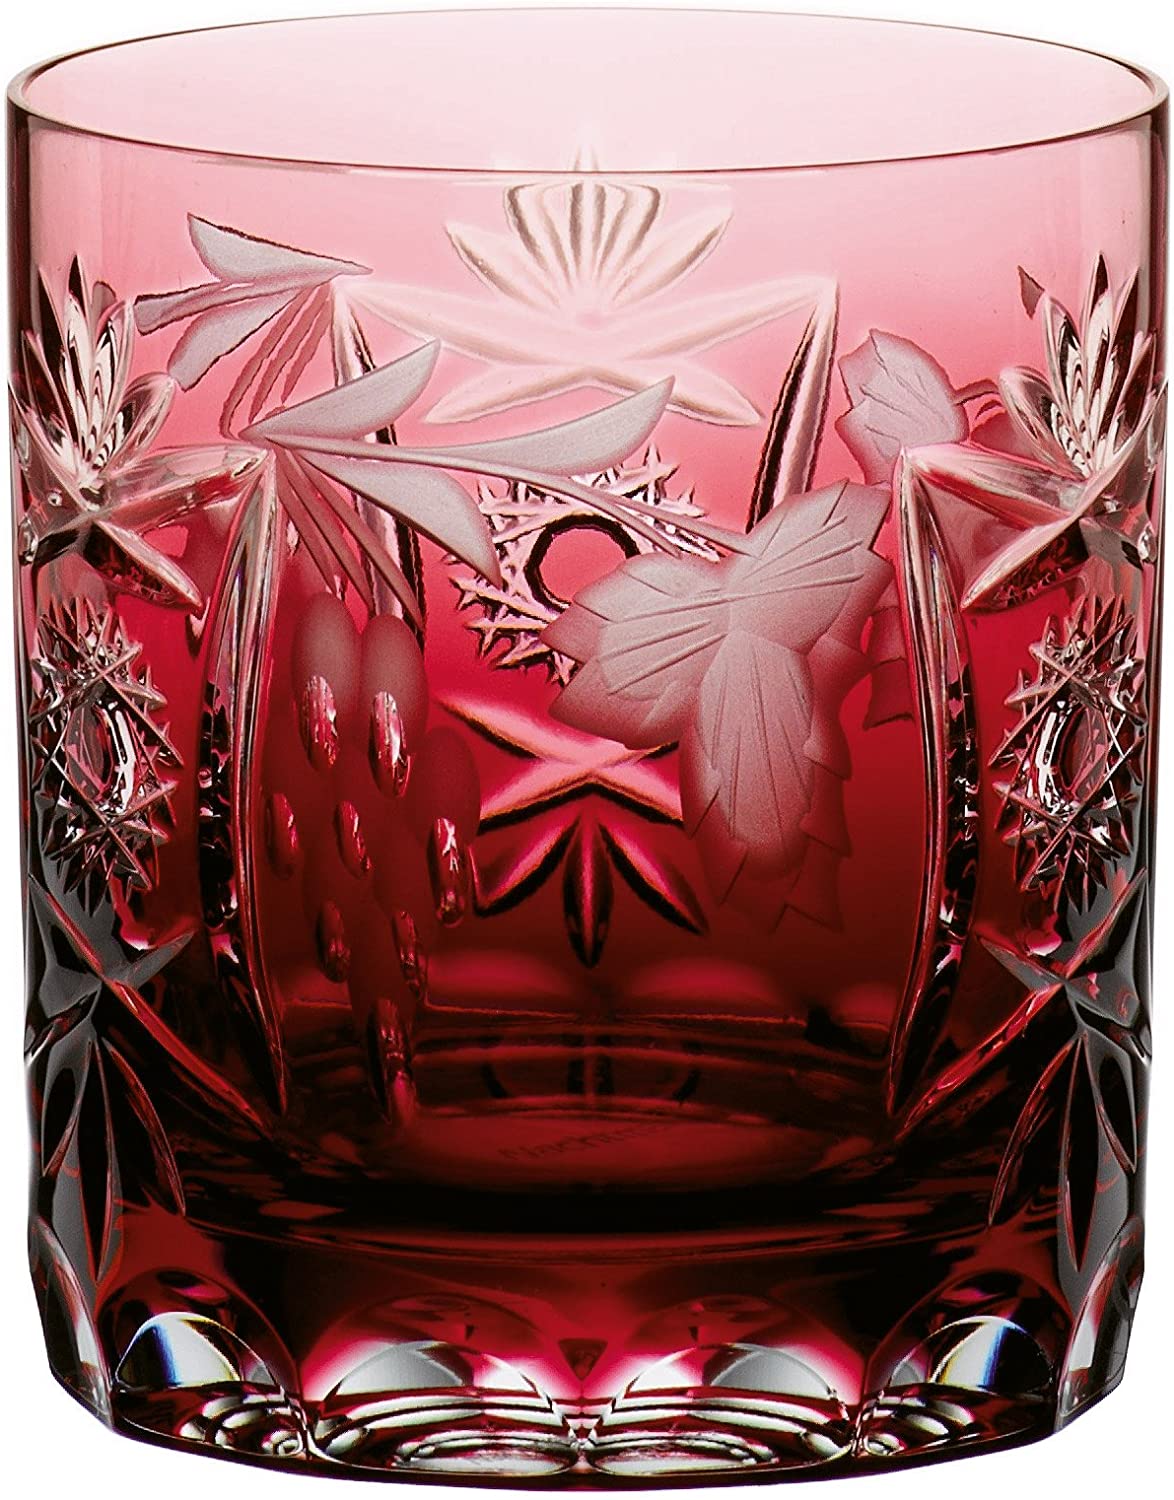 Spiegelau & Nachtmann, Pure whisky, 9 cm, grape, 35892, colour: gold ruby